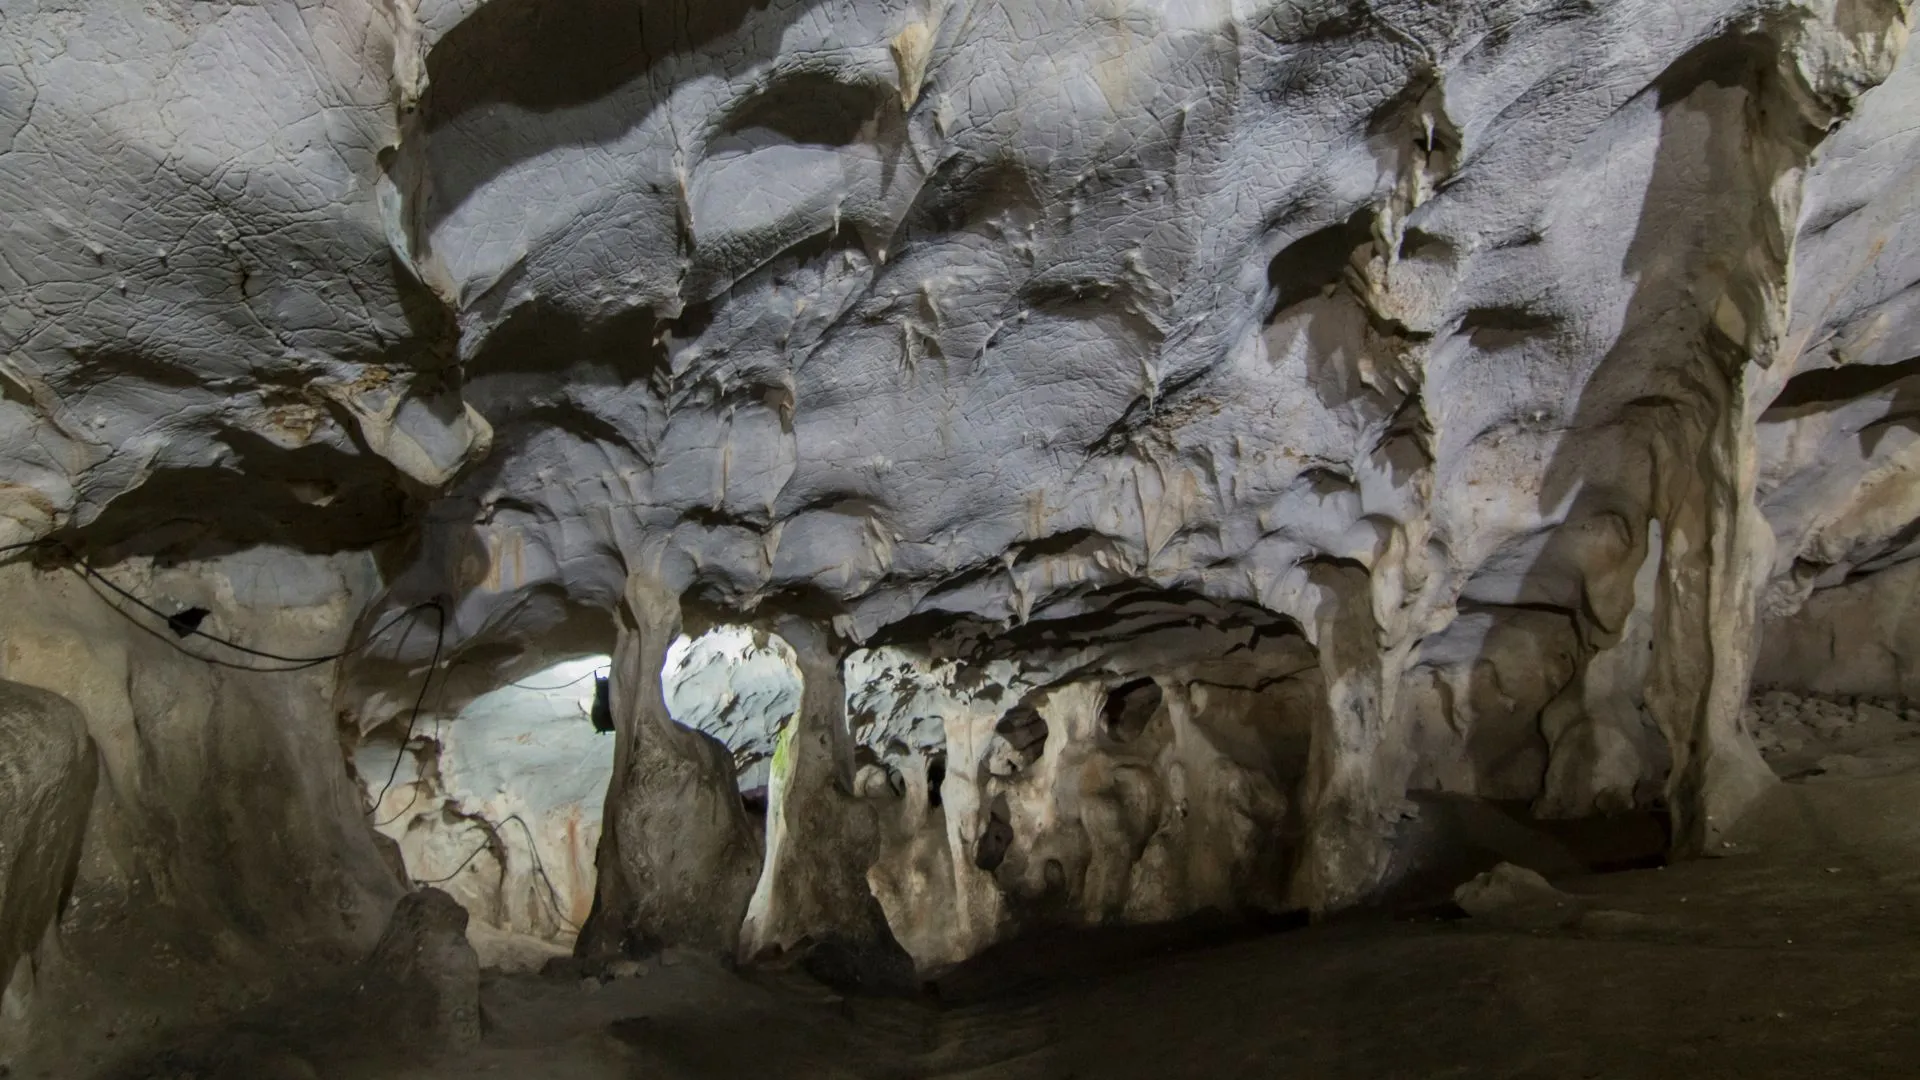 Karain Cave in Antalya